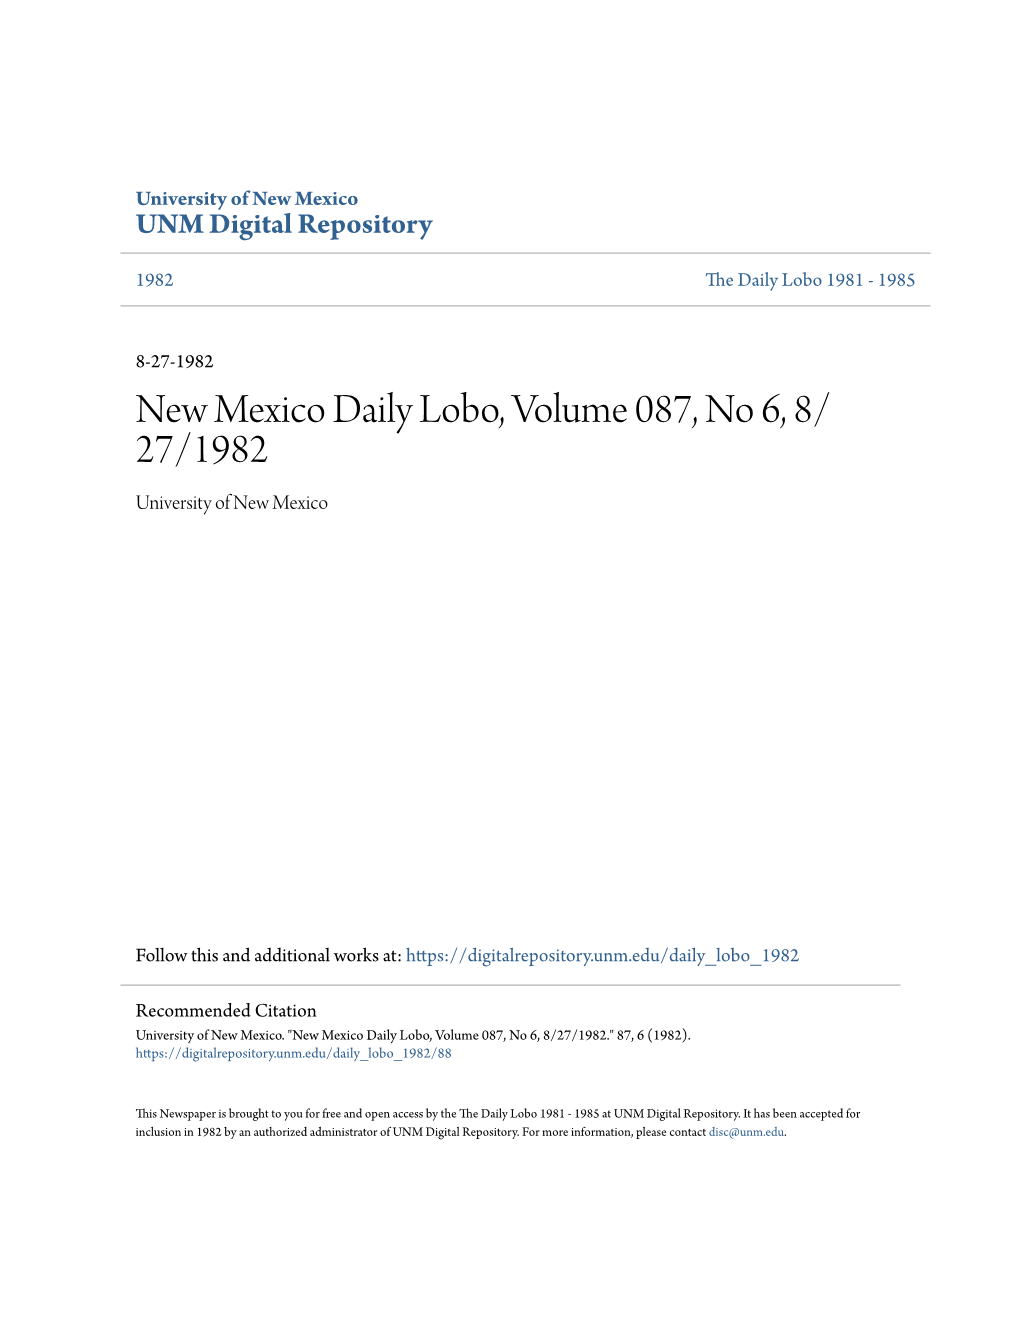 New Mexico Daily Lobo, Volume 087, No 6, 8/27/1982." 87, 6 (1982)